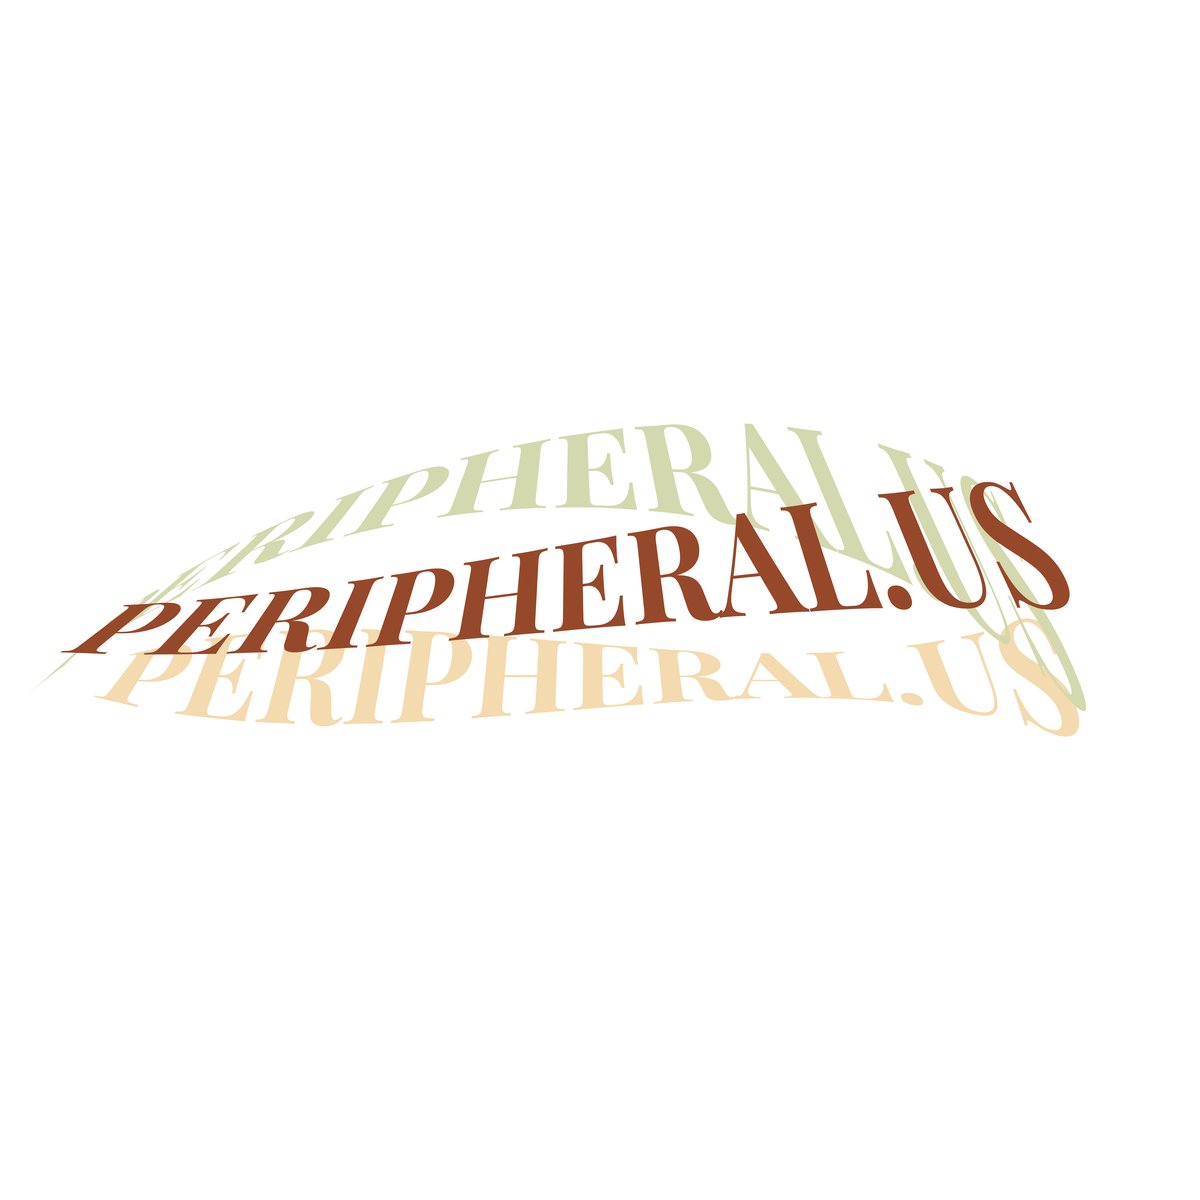 PeripheralUS